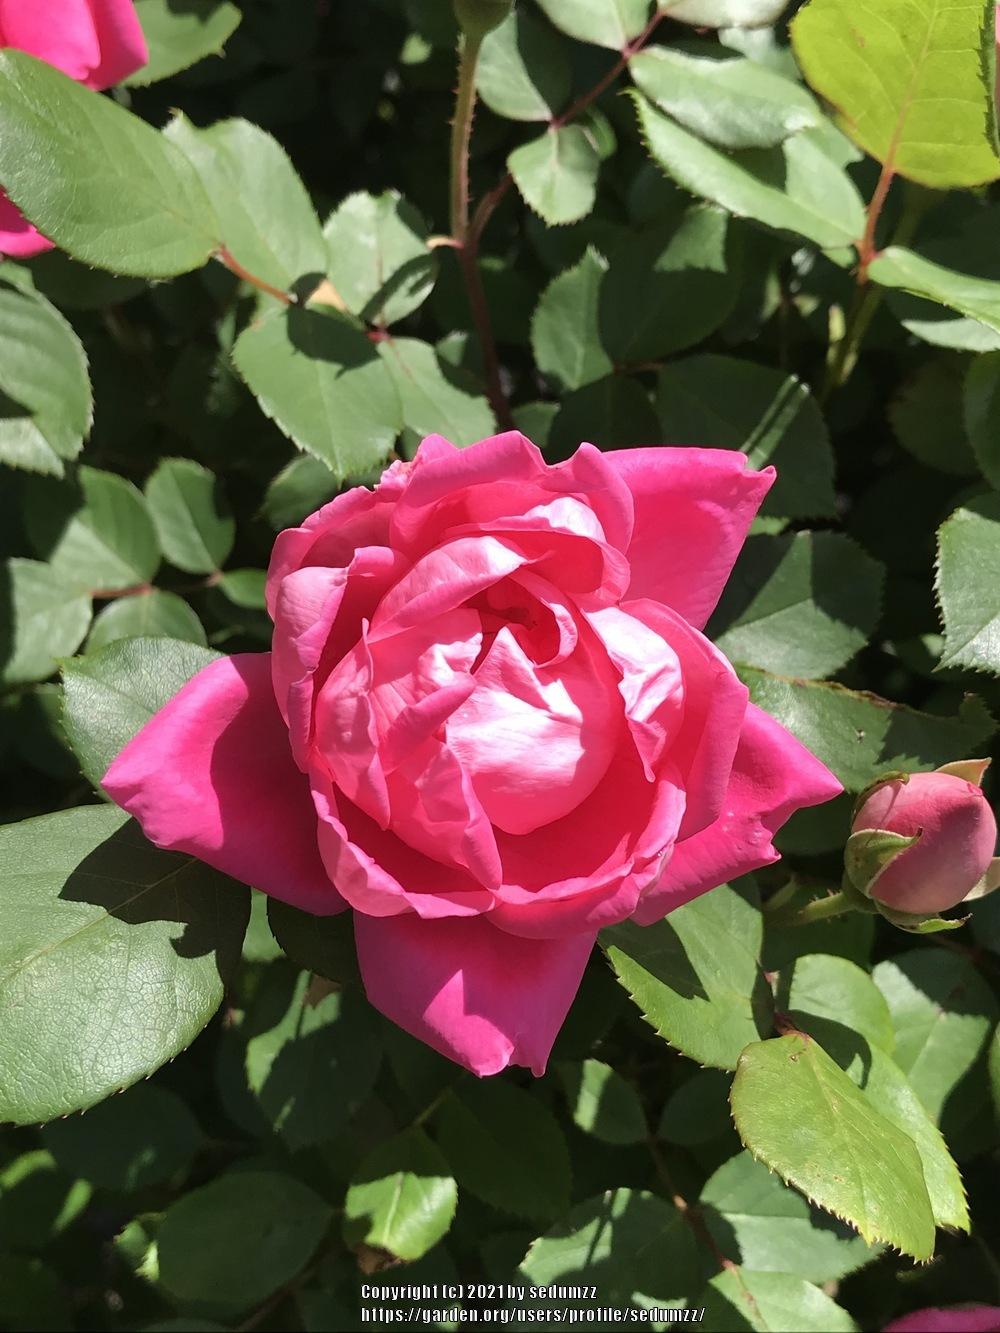 Photo of Roses (Rosa) uploaded by sedumzz